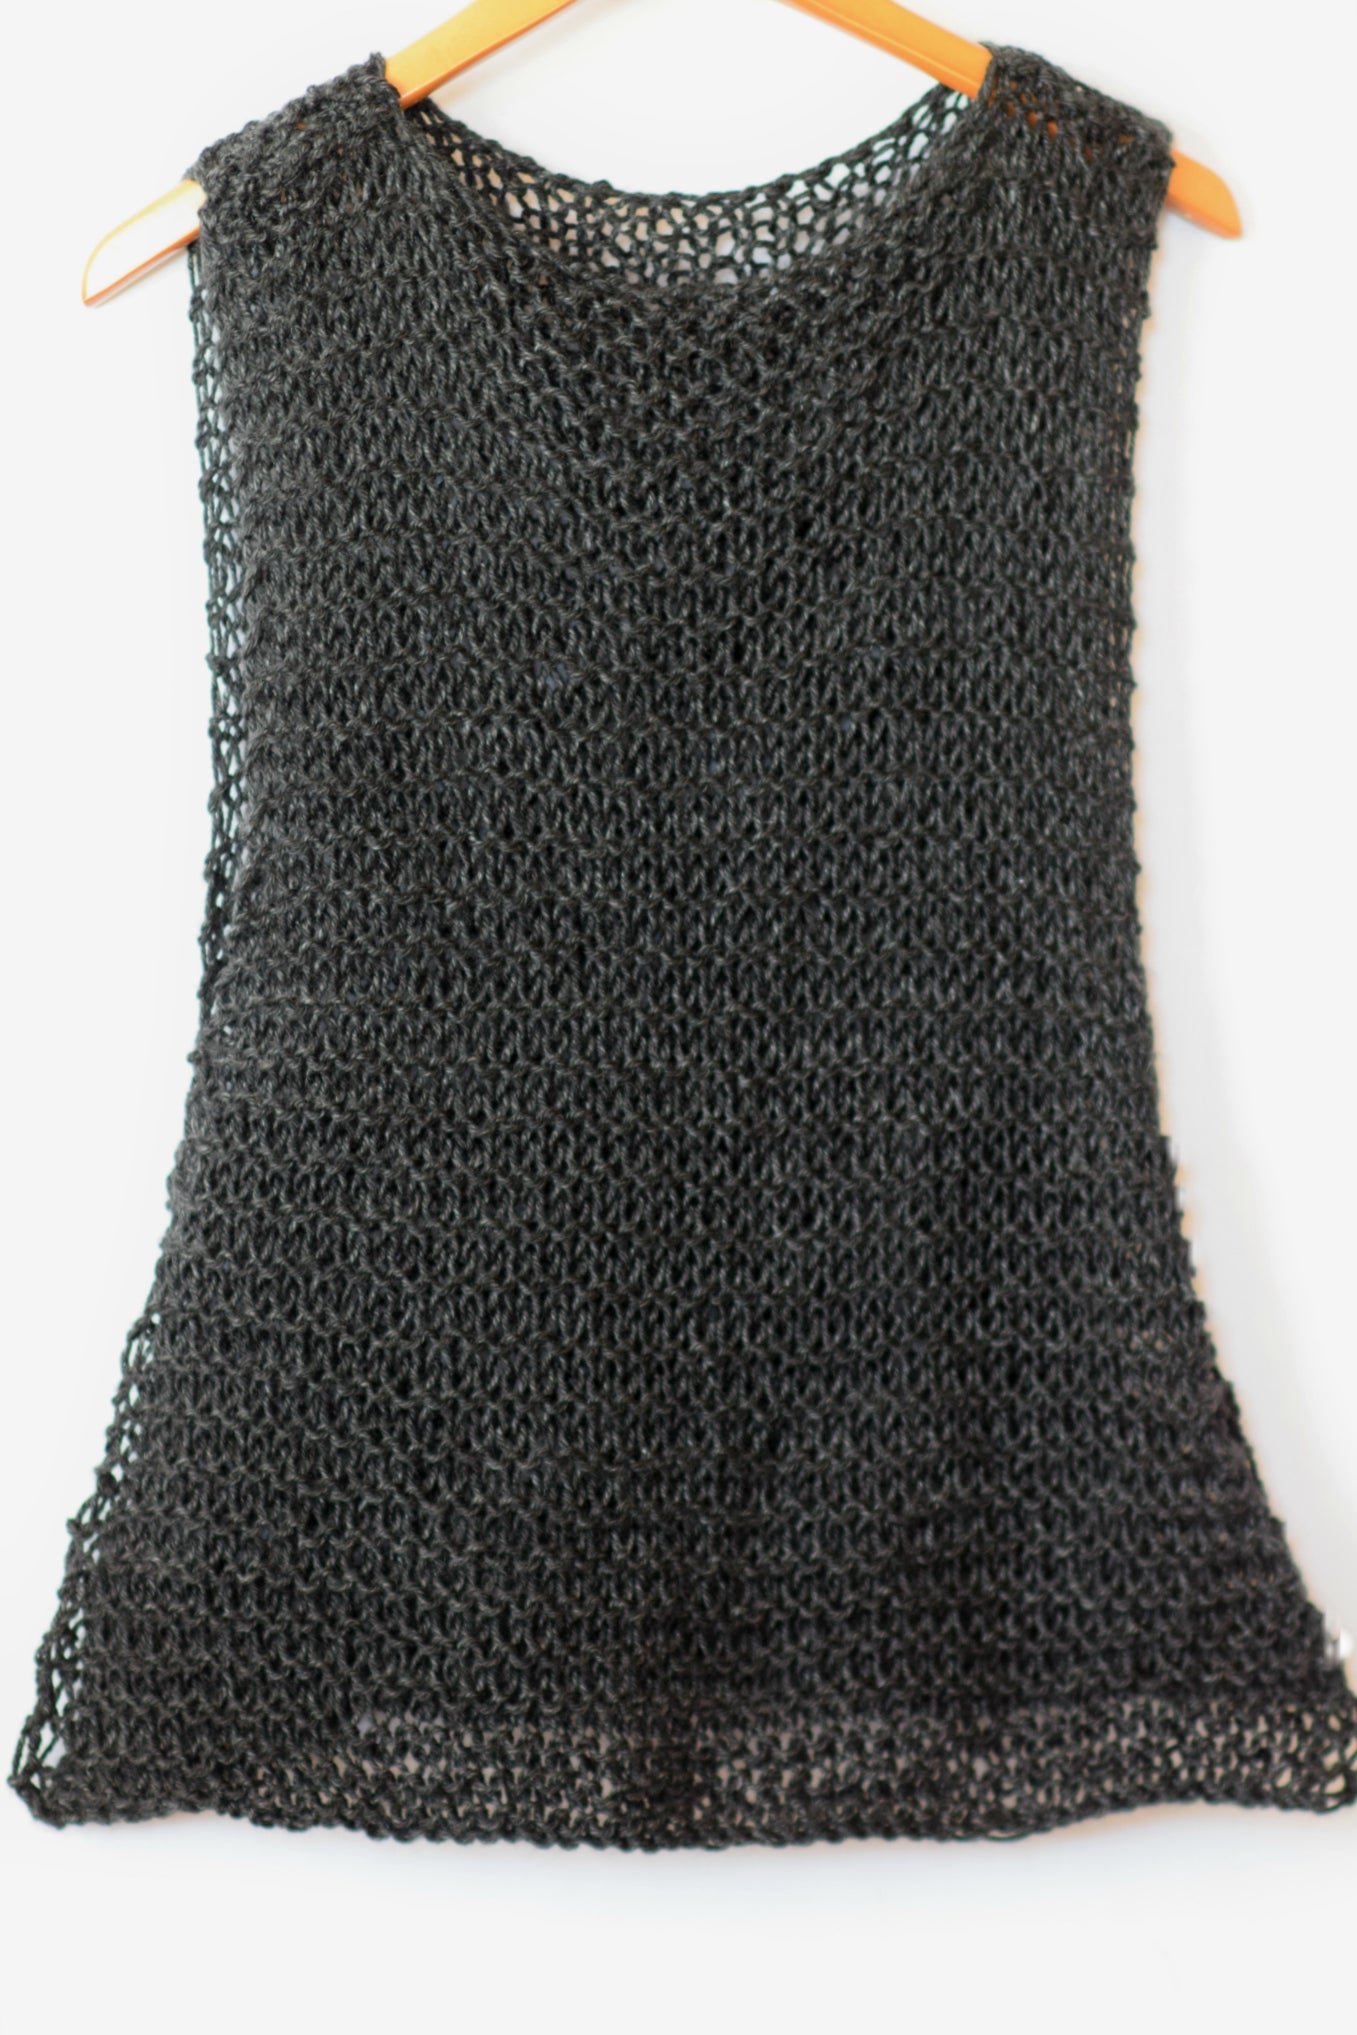 Knit Kit - Little Black Tank Top – Lion Brand Yarn